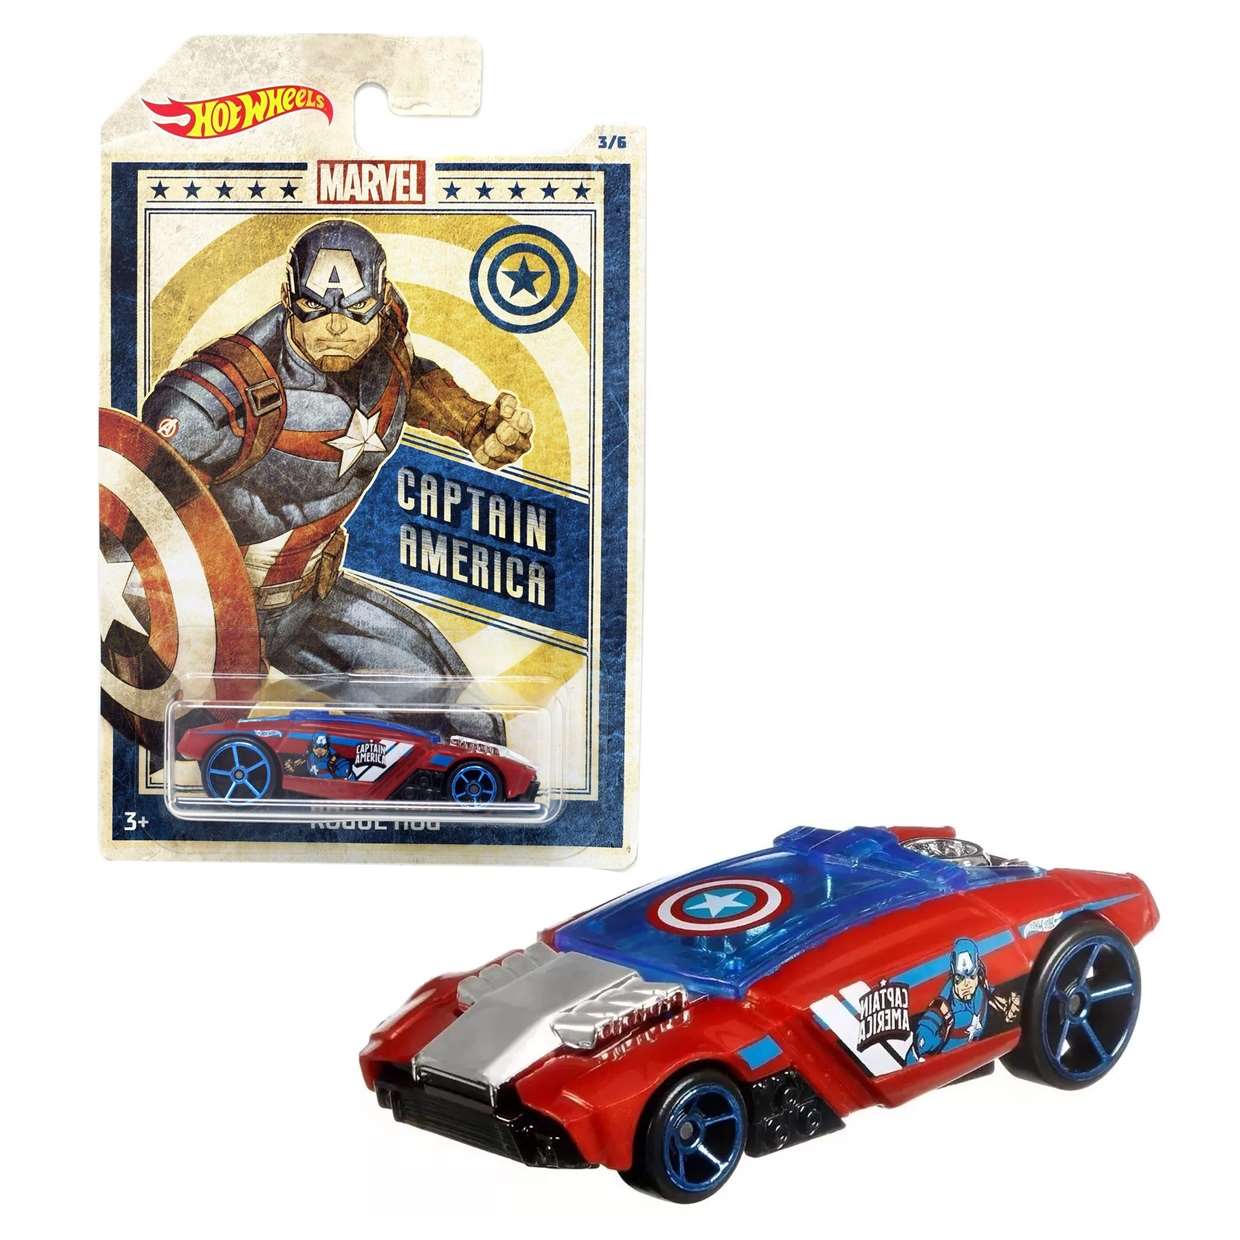 Capitán América ( Rogue Hog ) Hot Wheels Collect Them All